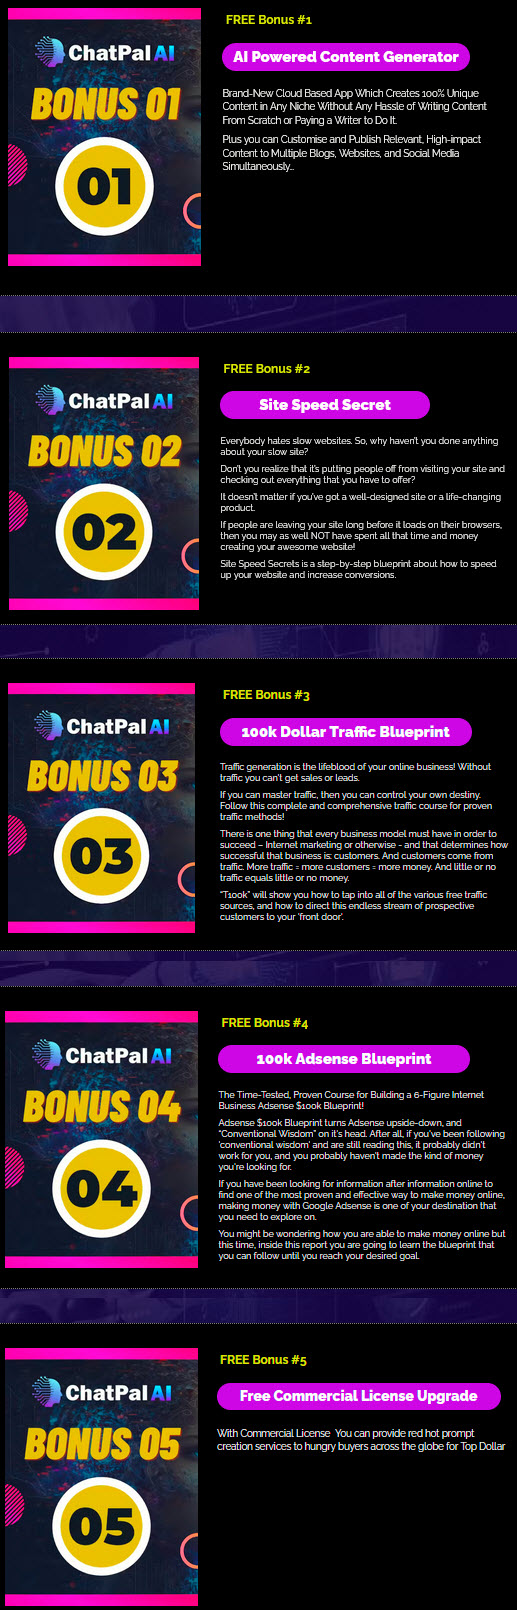 ChatPal AI Review Bonuses